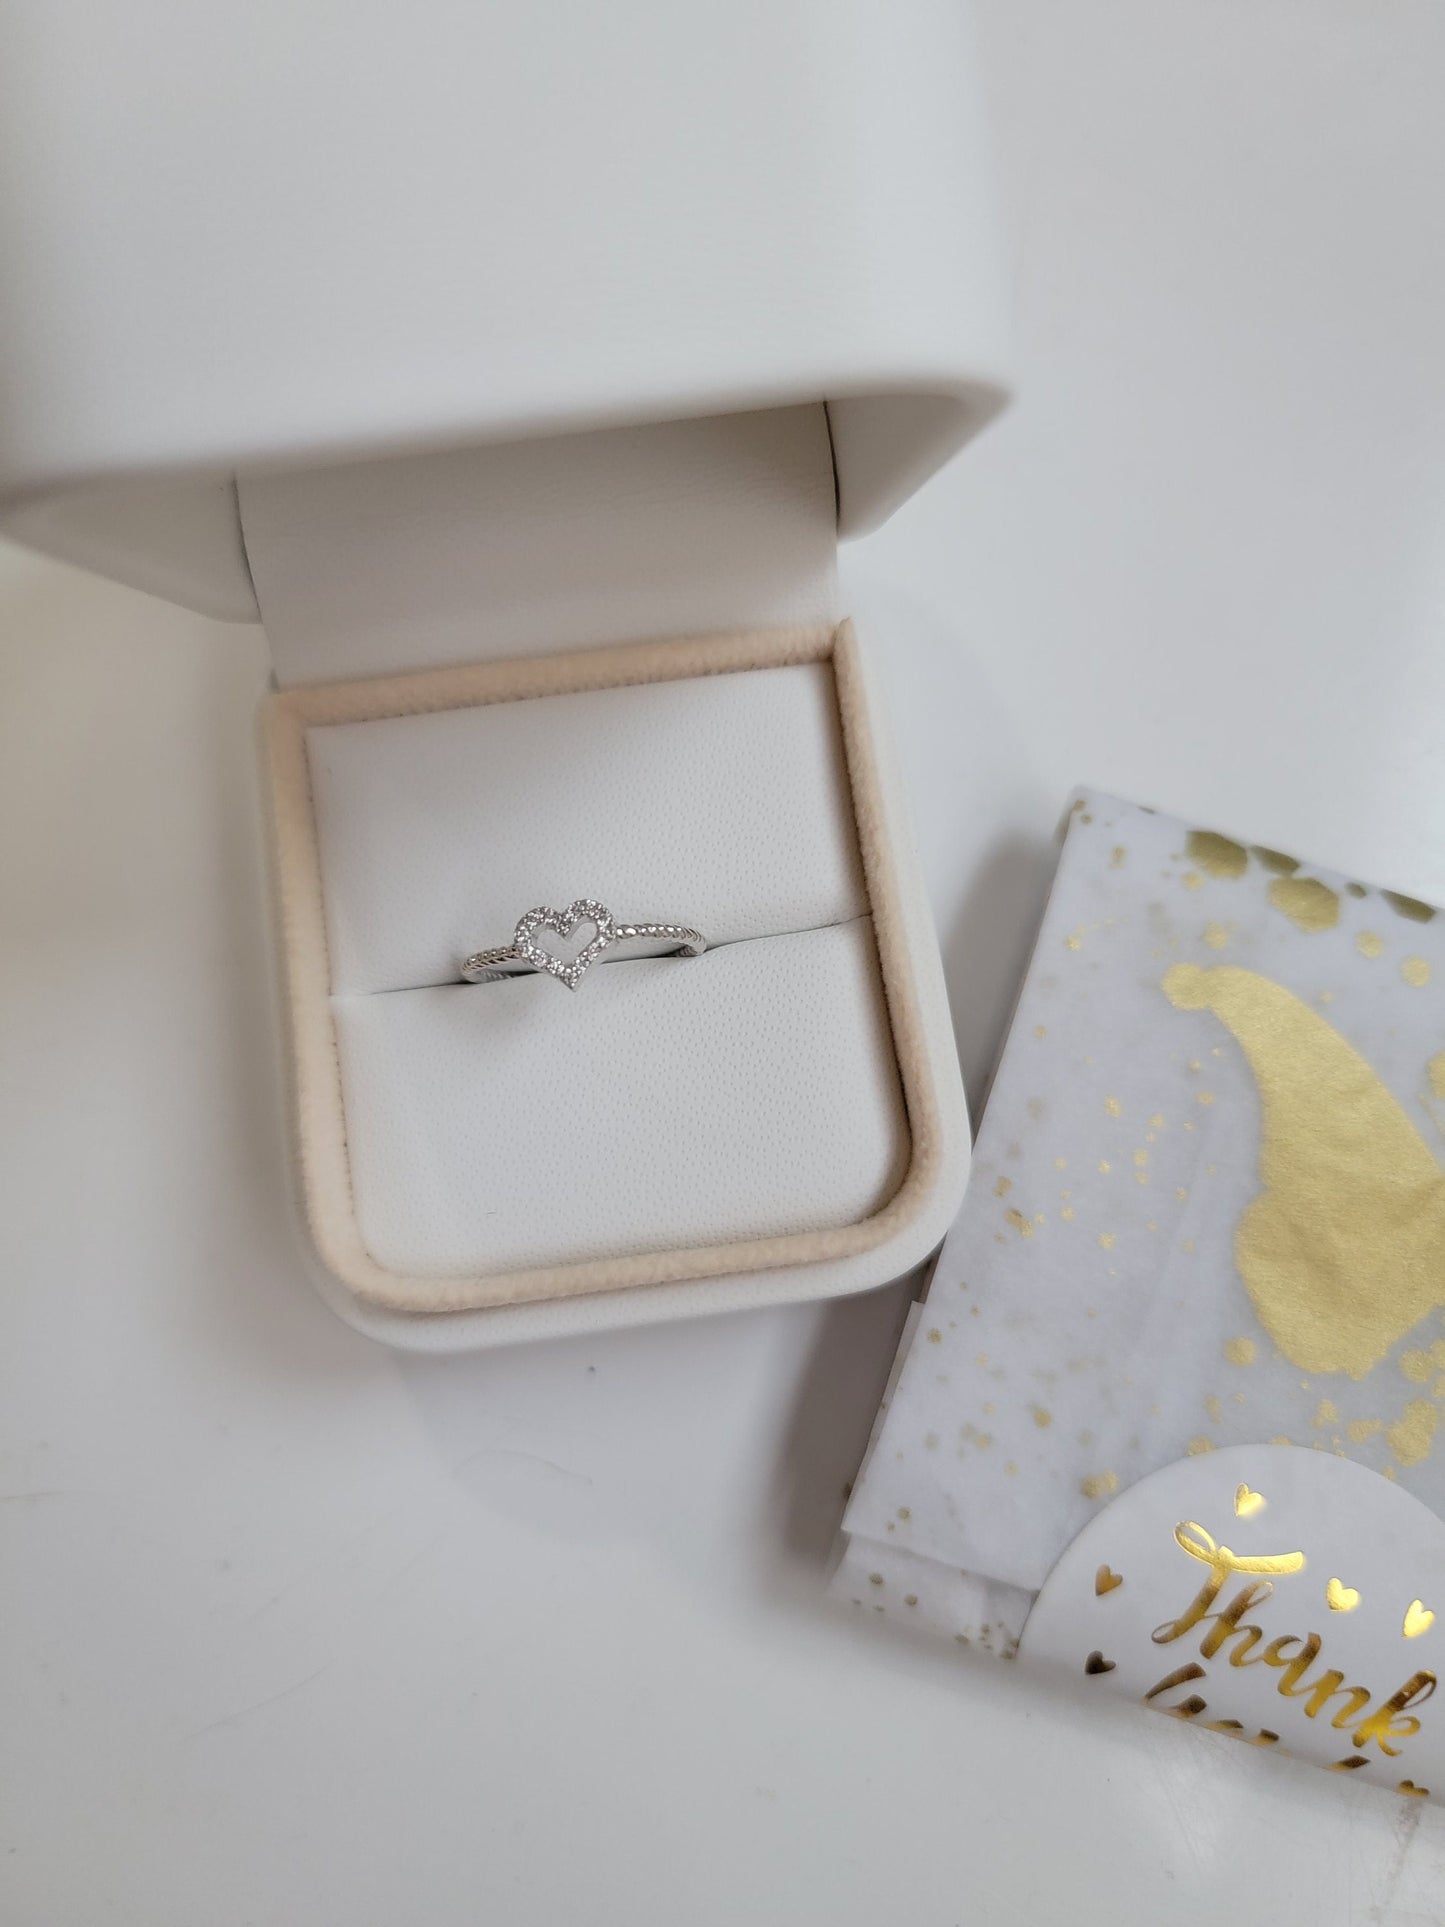 Diamond Heart Ring in14k Solid Gold, Gold Heart Ring for Her, Anniversary Rings, Heart Shape Ring, White Gold Diamond Ring